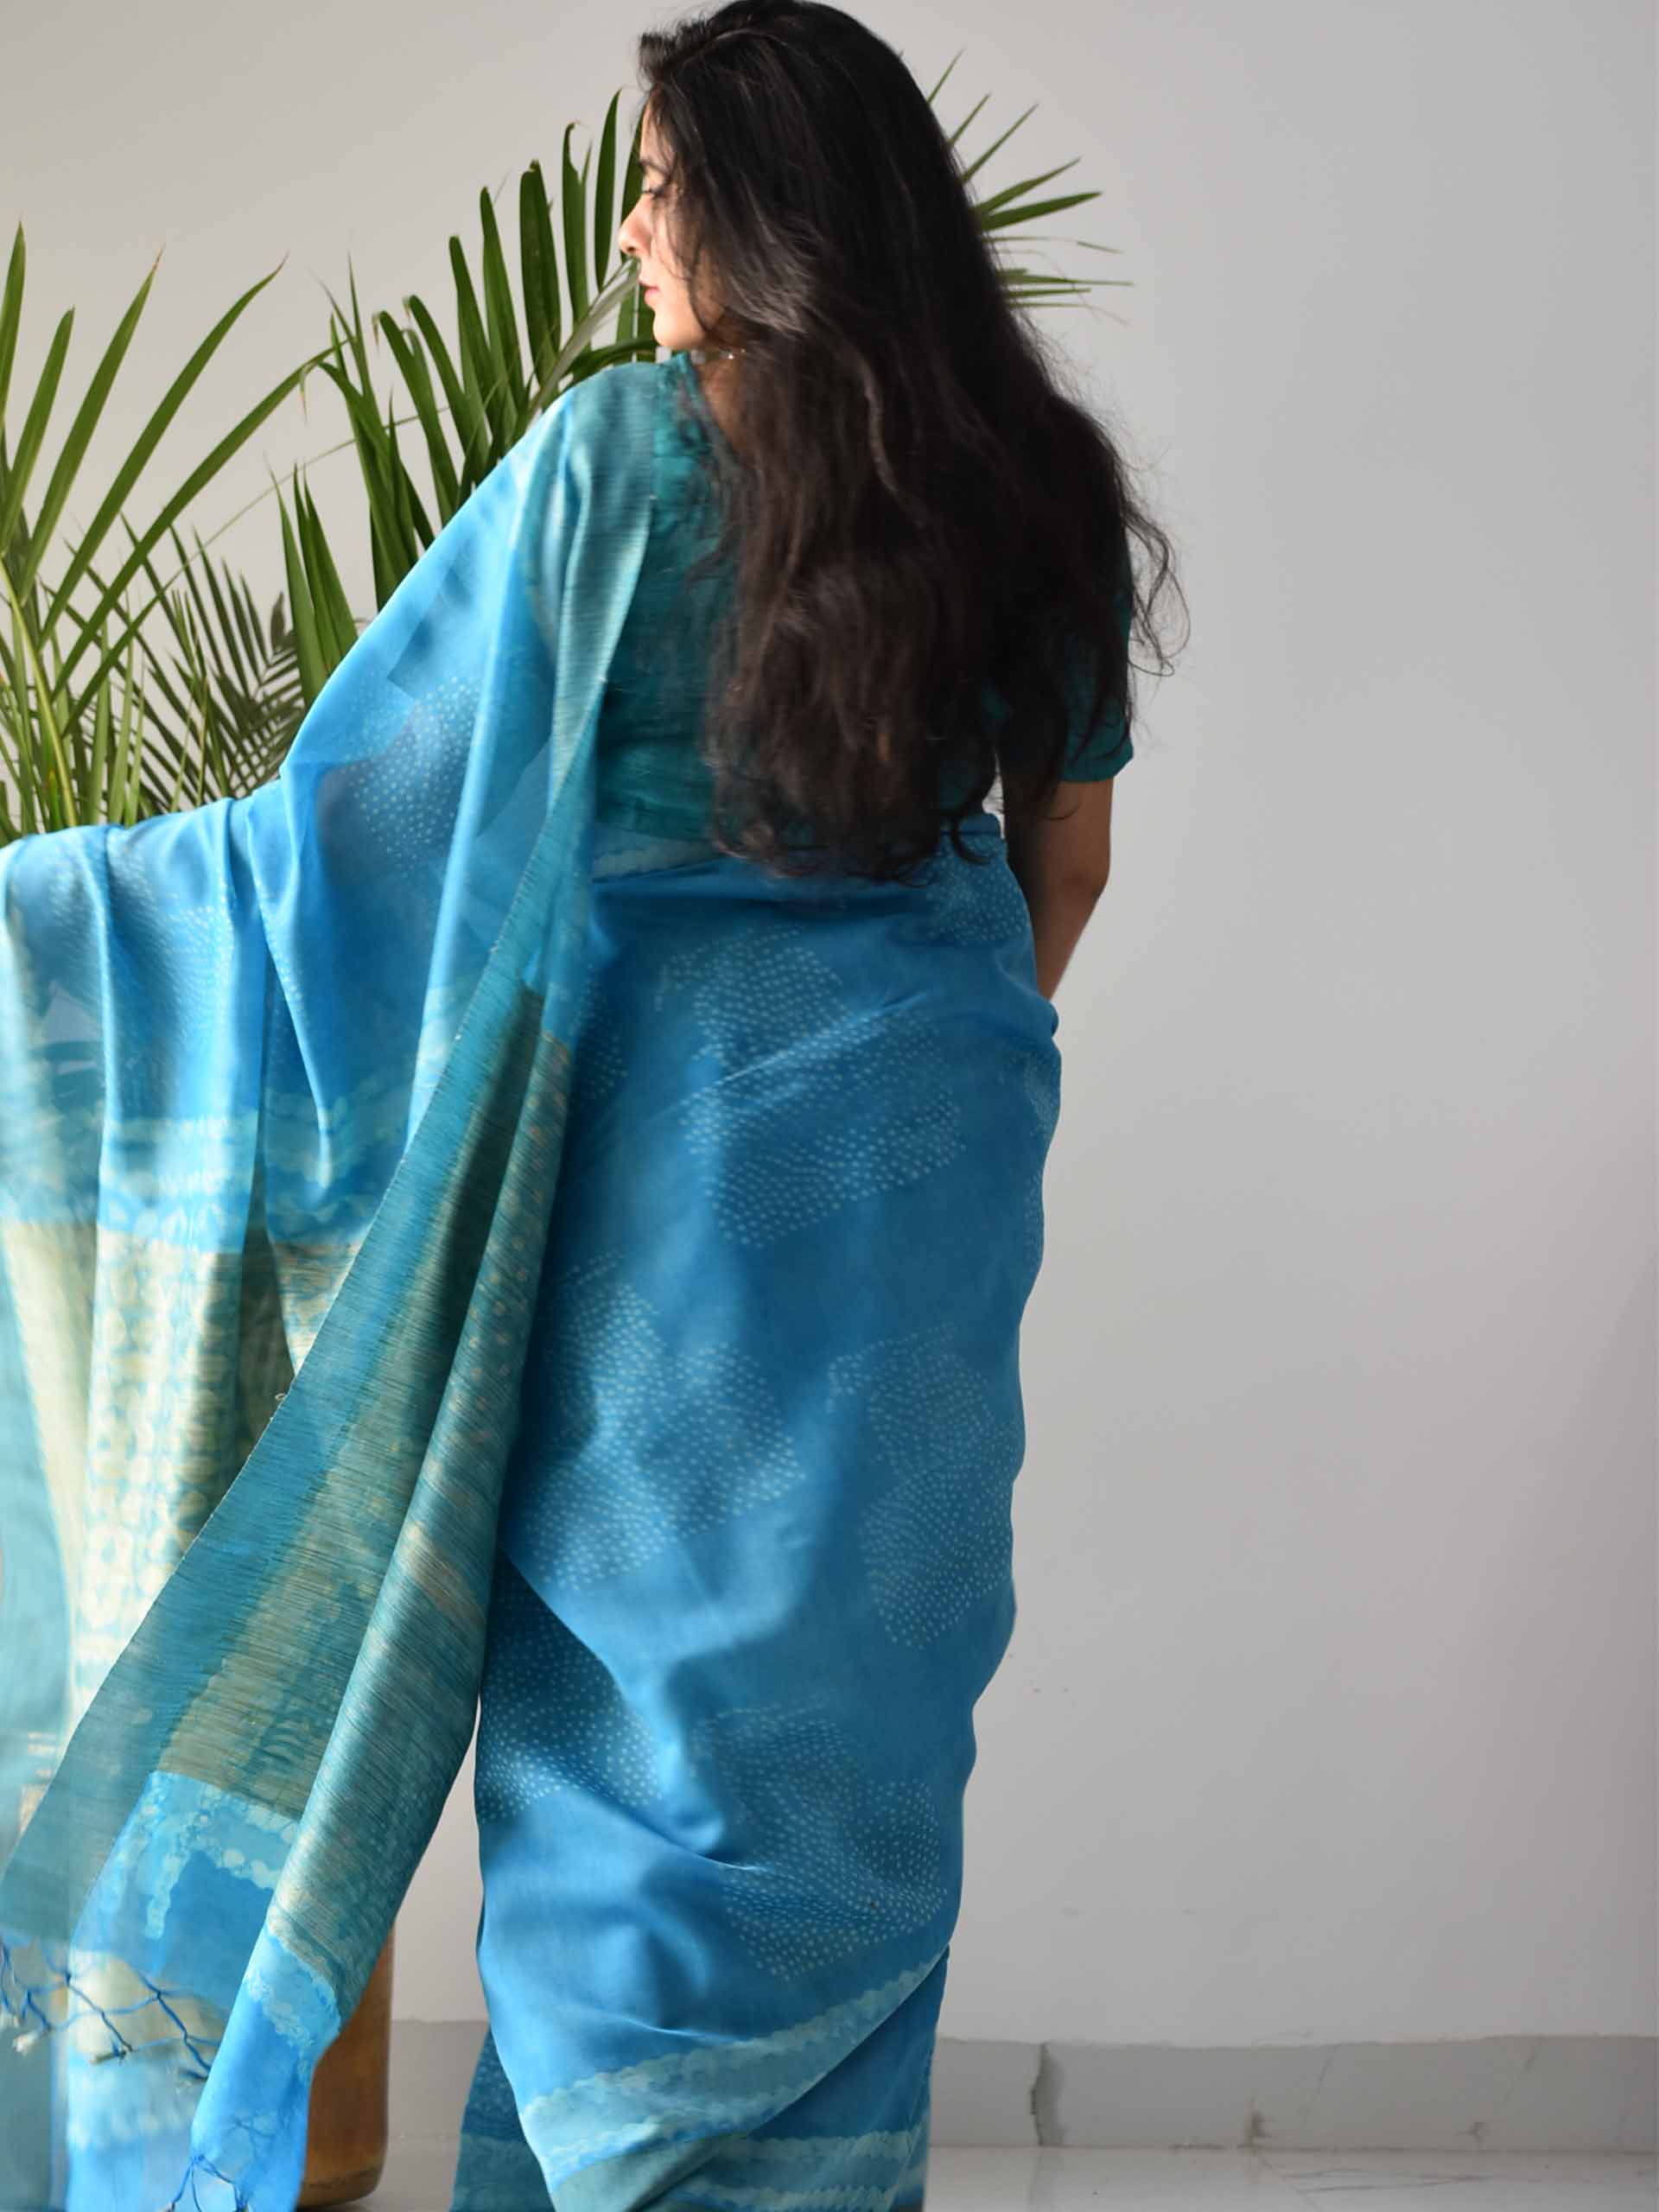 Sky Blue Pola dots Dabu hand block printed Maheshwari silk saree